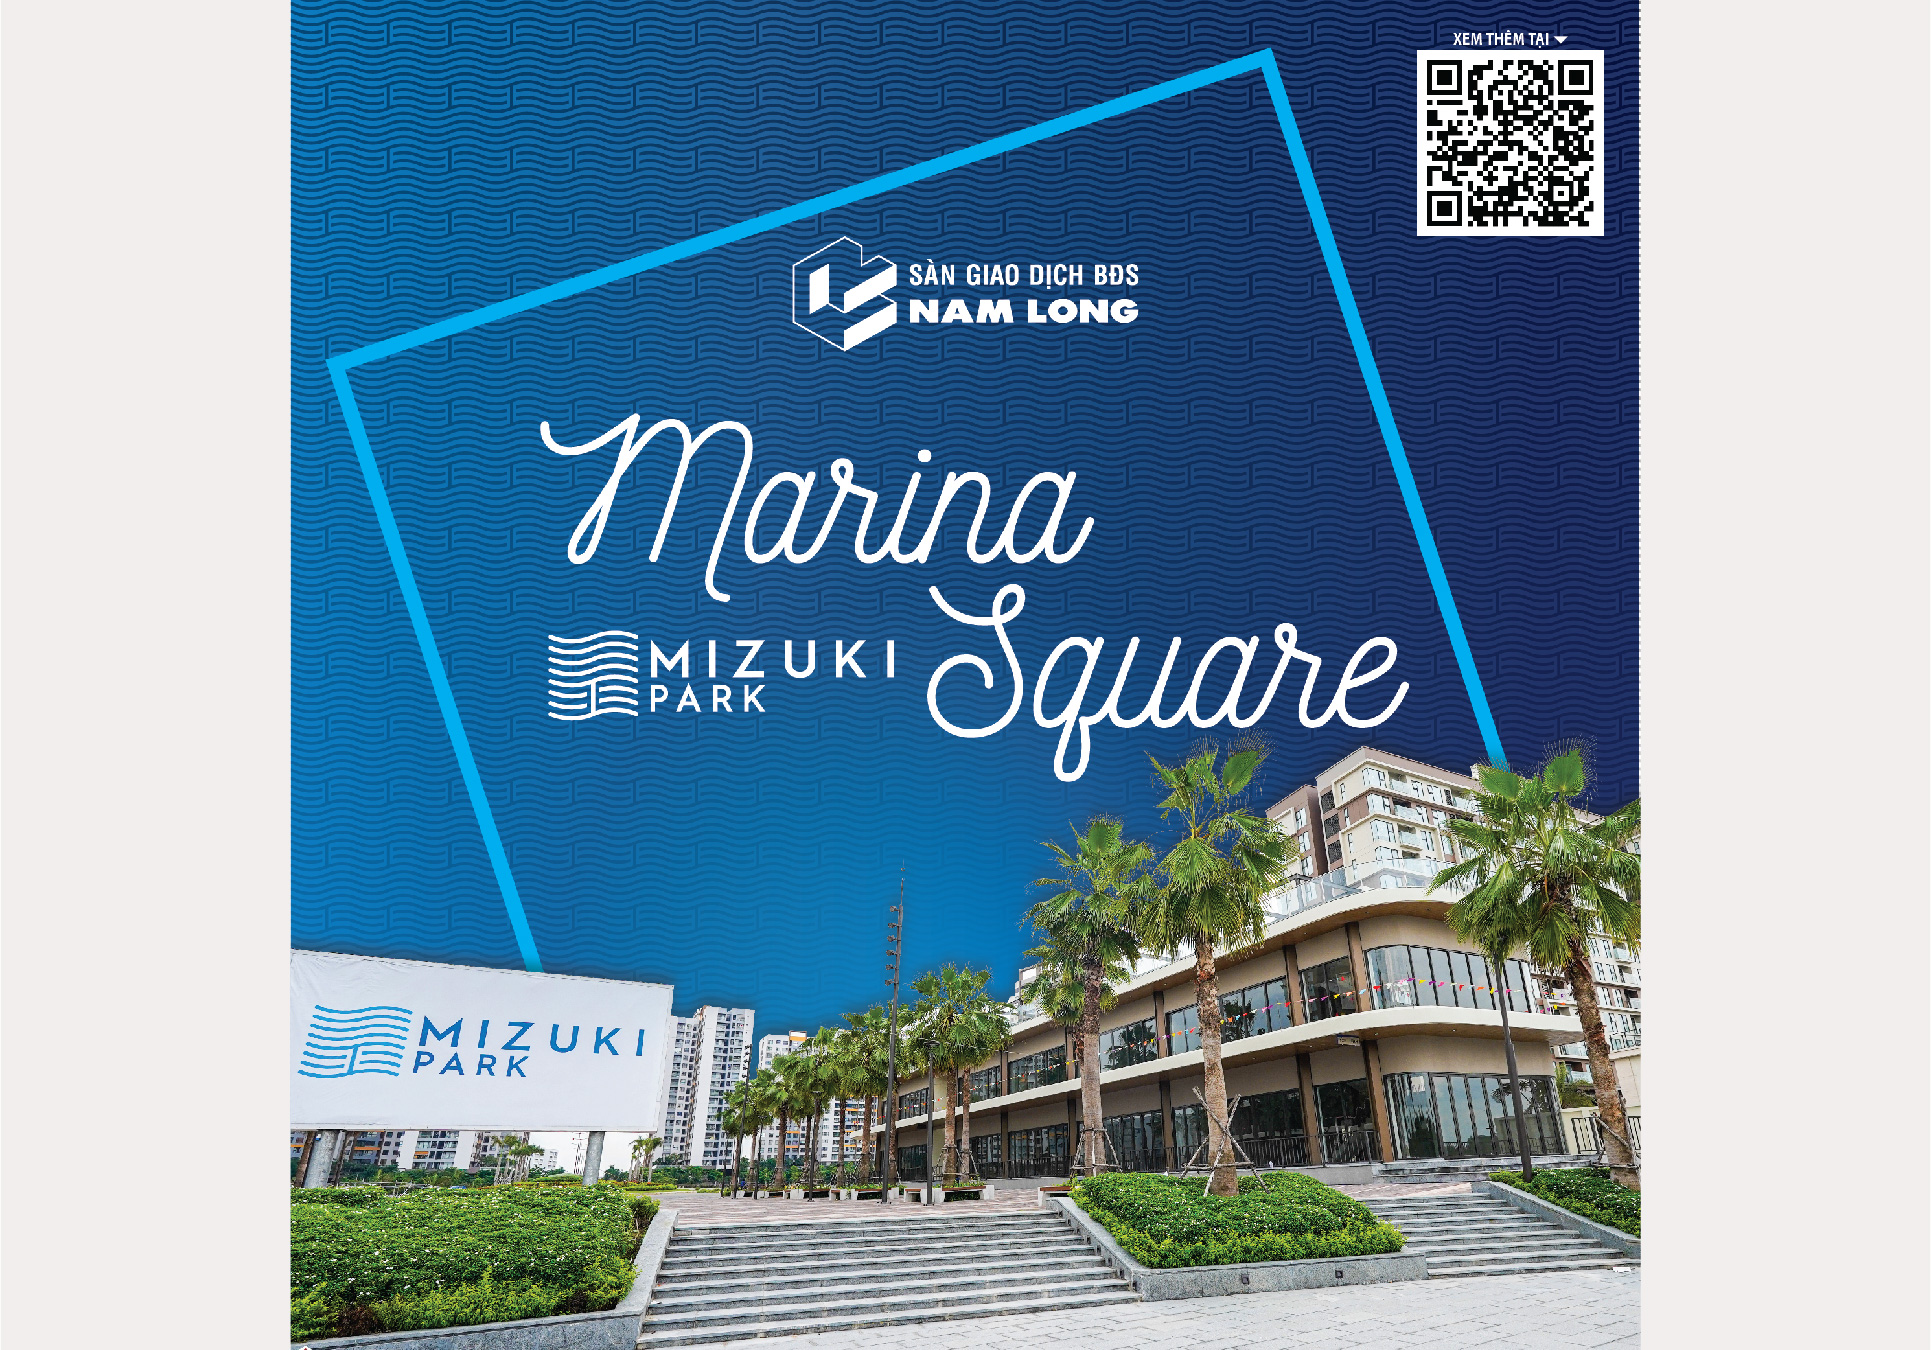 Mizuki Park – Marina Square